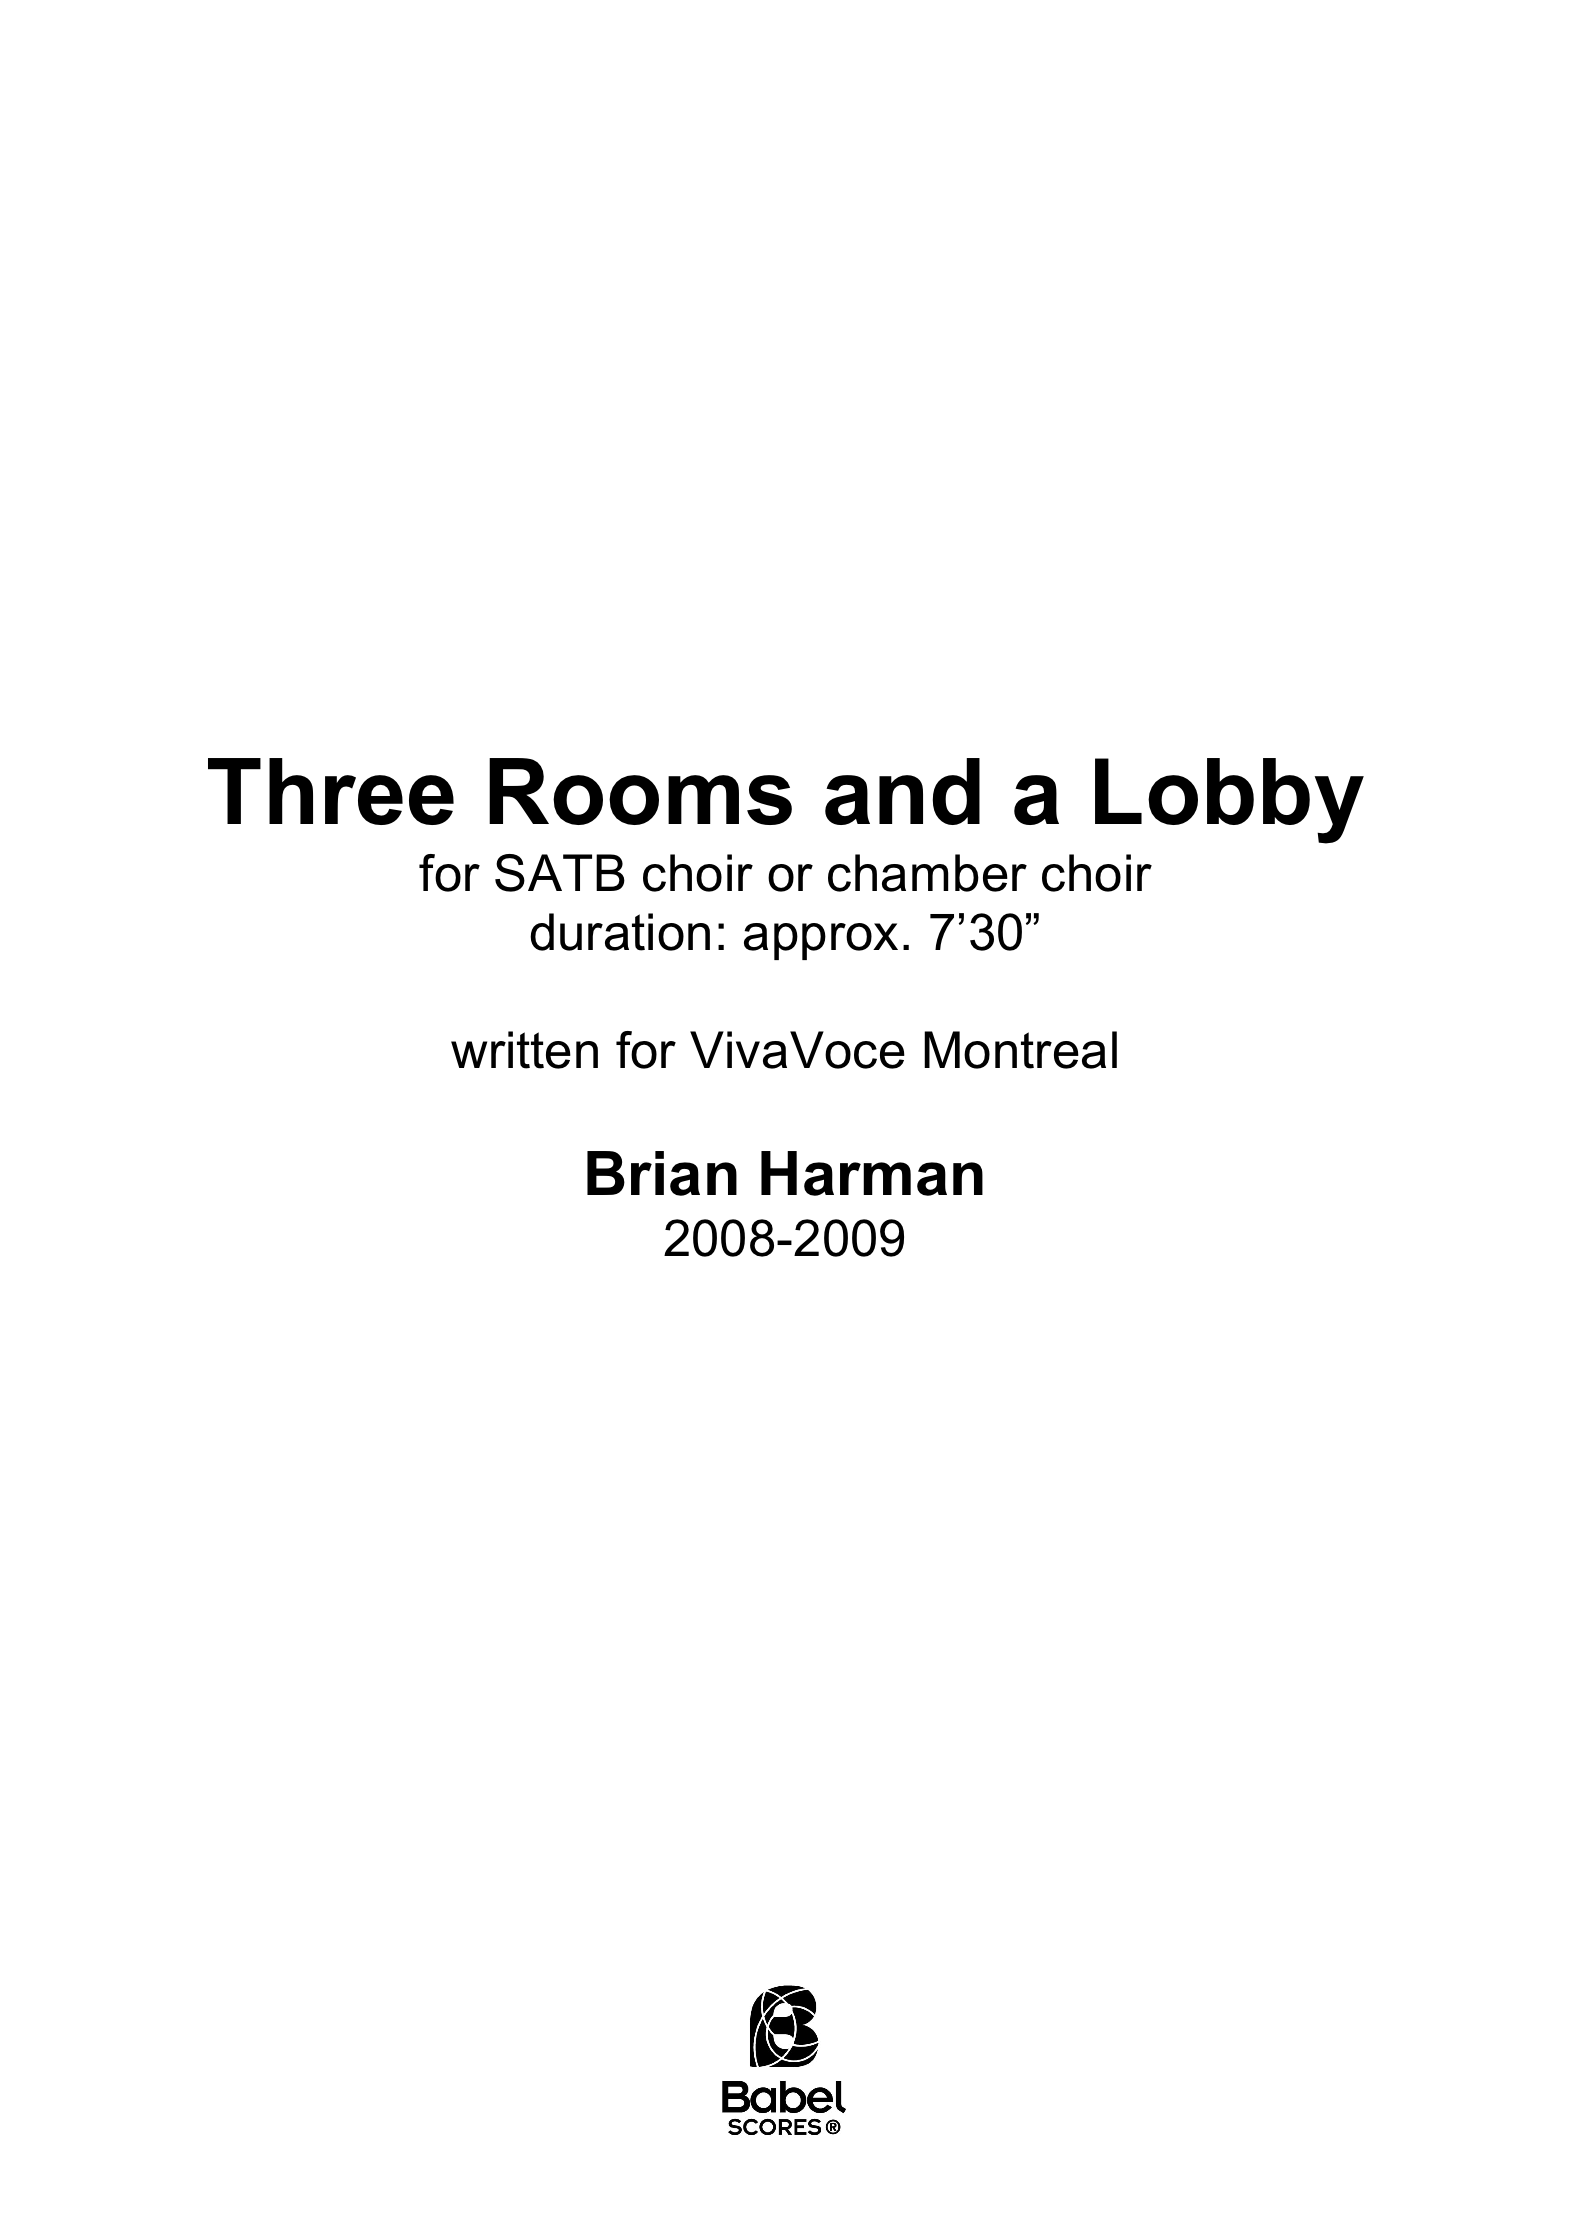 Three Rooms A4 z